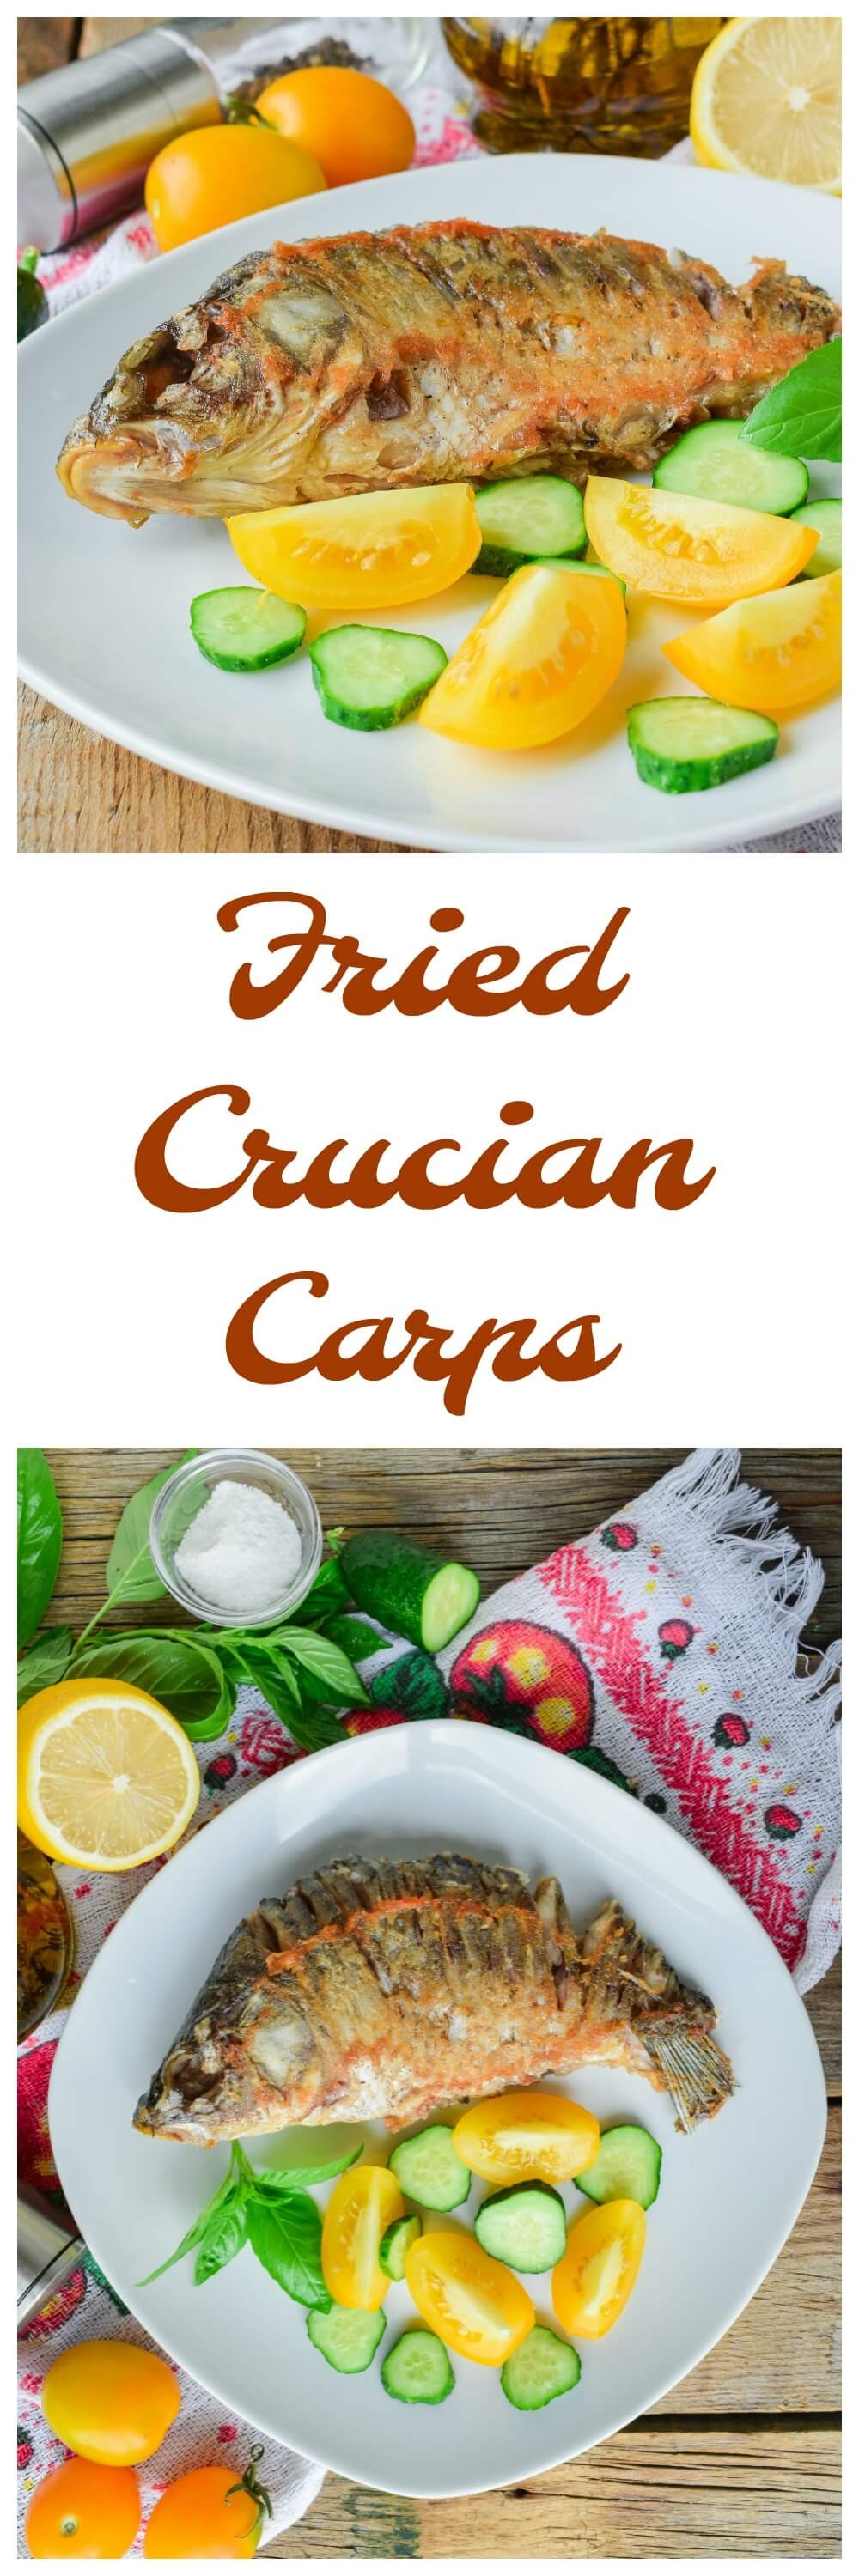 Fried Crucian Carps in Flour